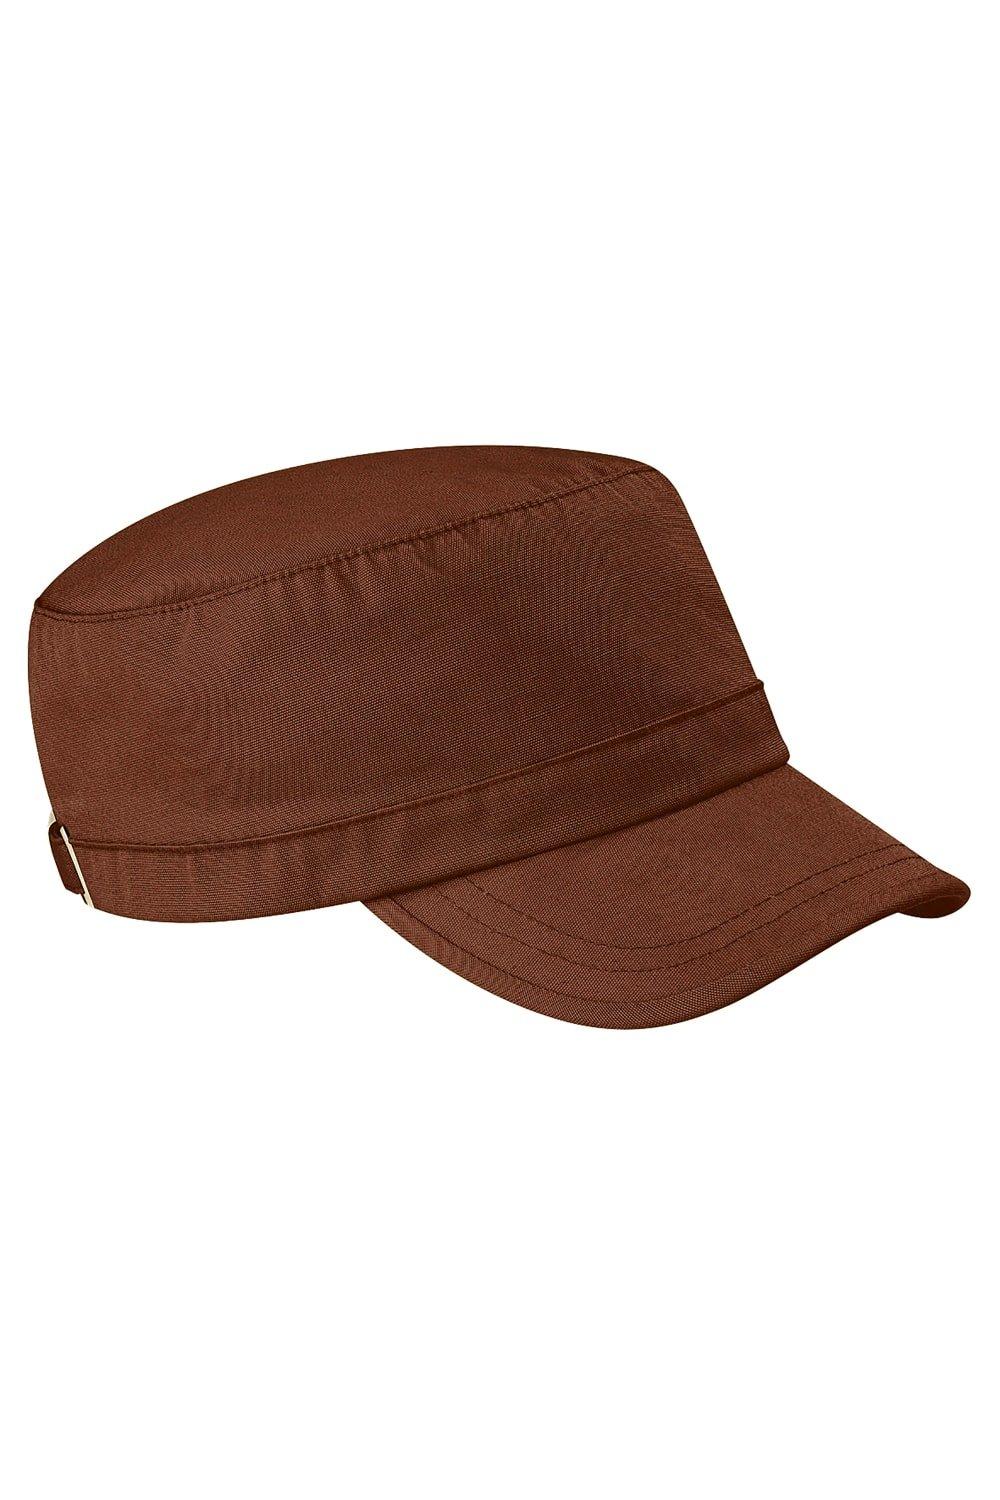 Армейская кепка/головной убор Beechfield, коричневый